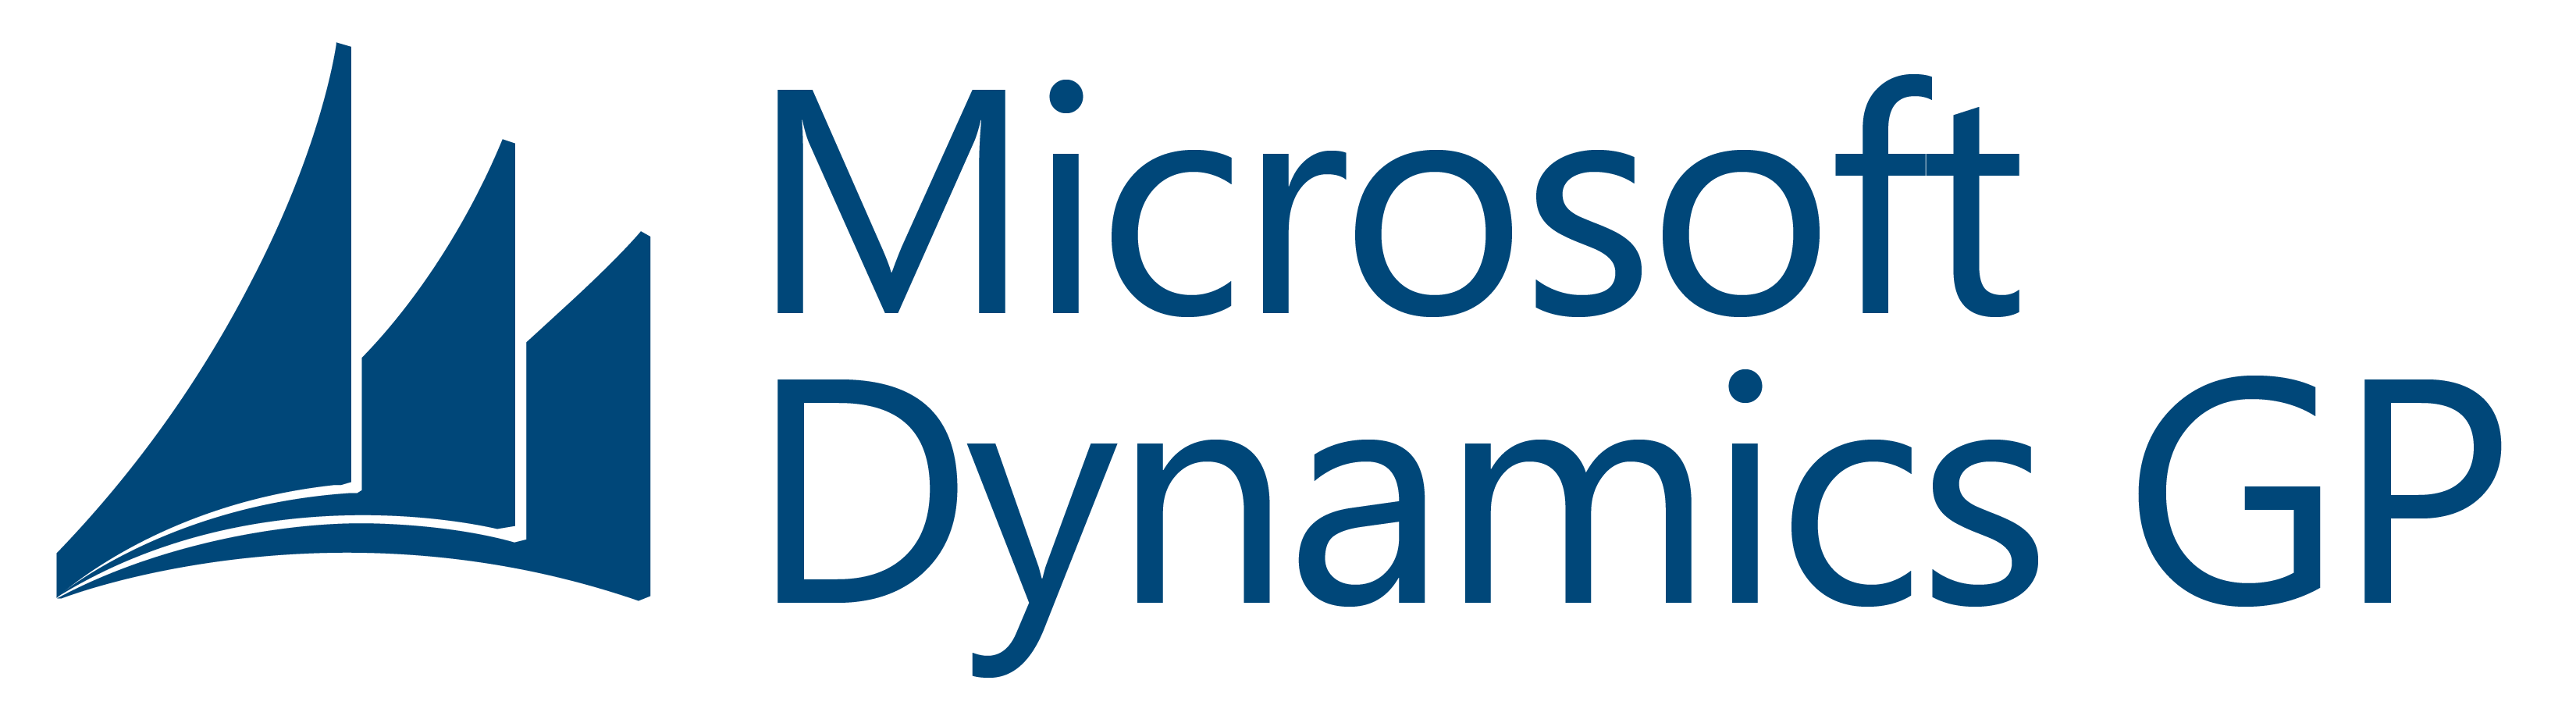 Dynamics GP Logo - Implementation Specialists. Microsoft Dynamics GP & ERP Solutions